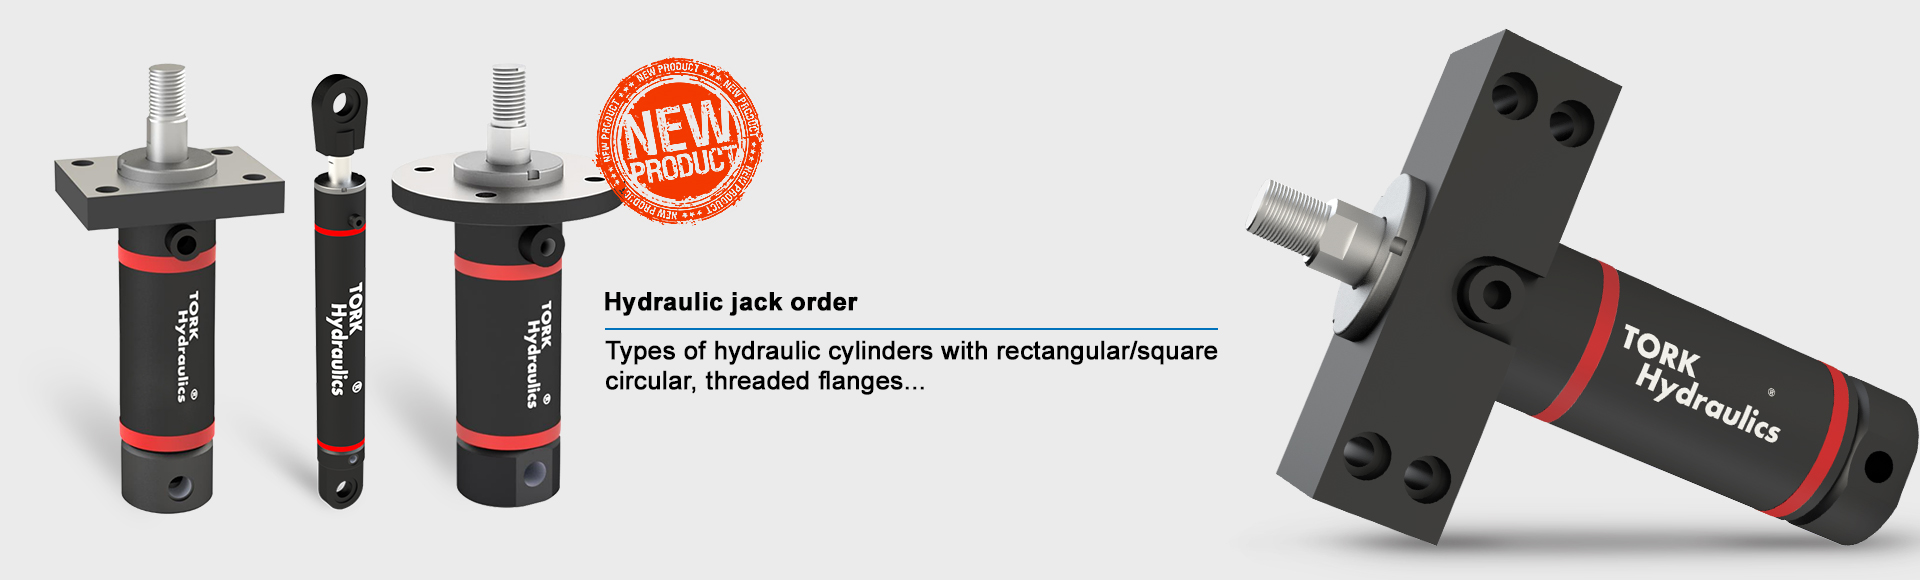 Hydraulic jack - making and ordering hydraulic cylinder - circular-square-rectangular-threaded flange cylinder